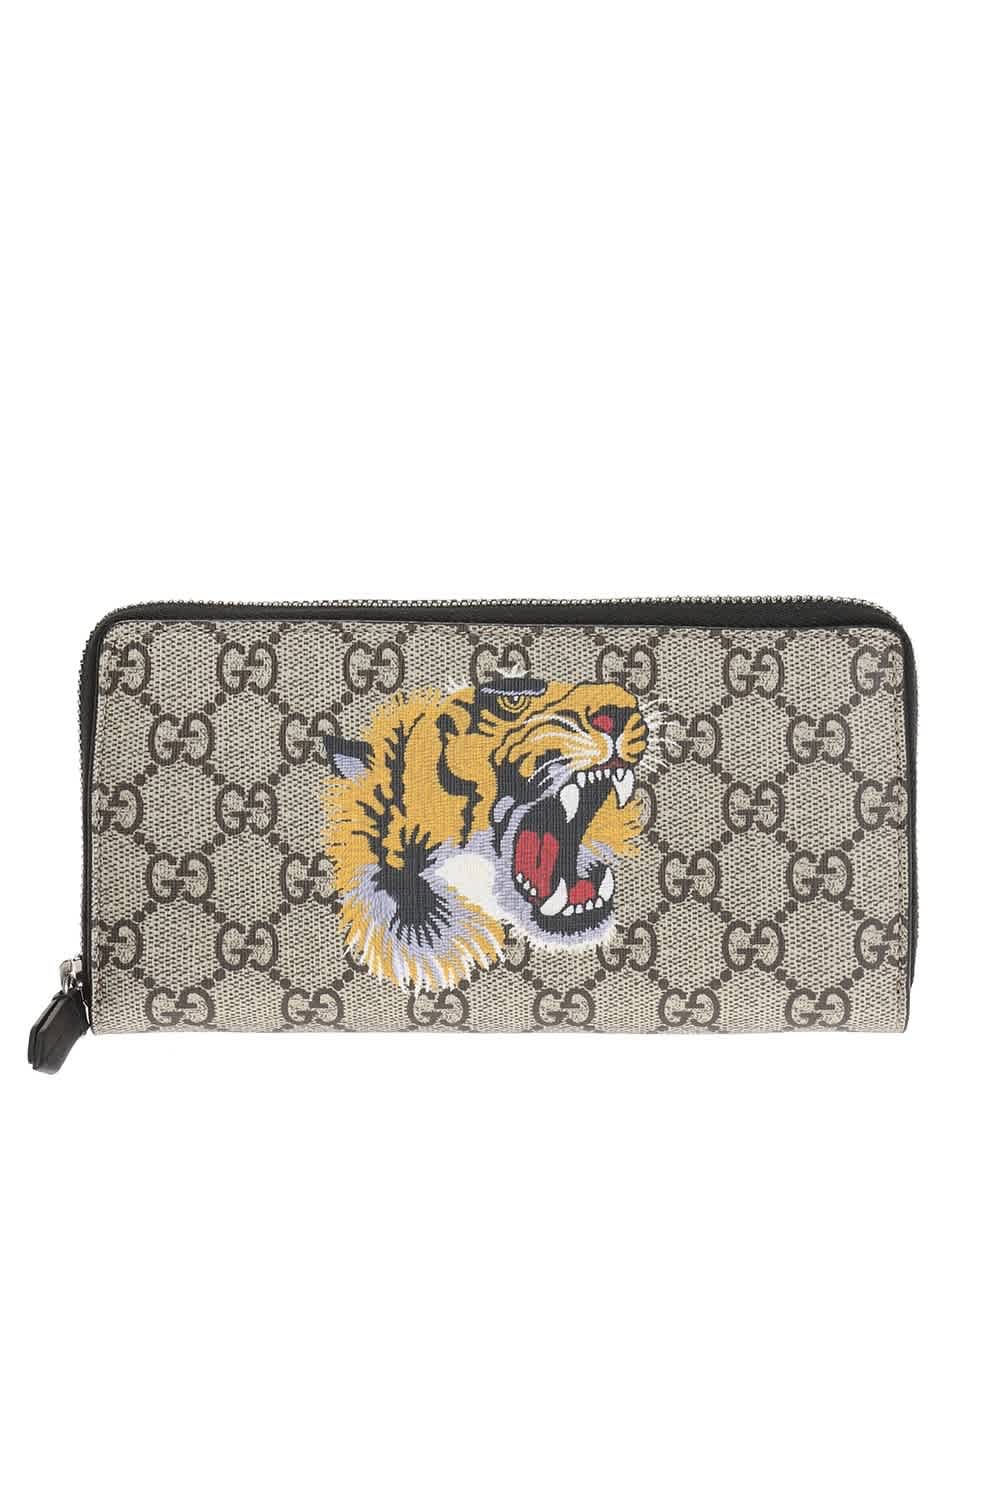 gucci tiger supreme wallet